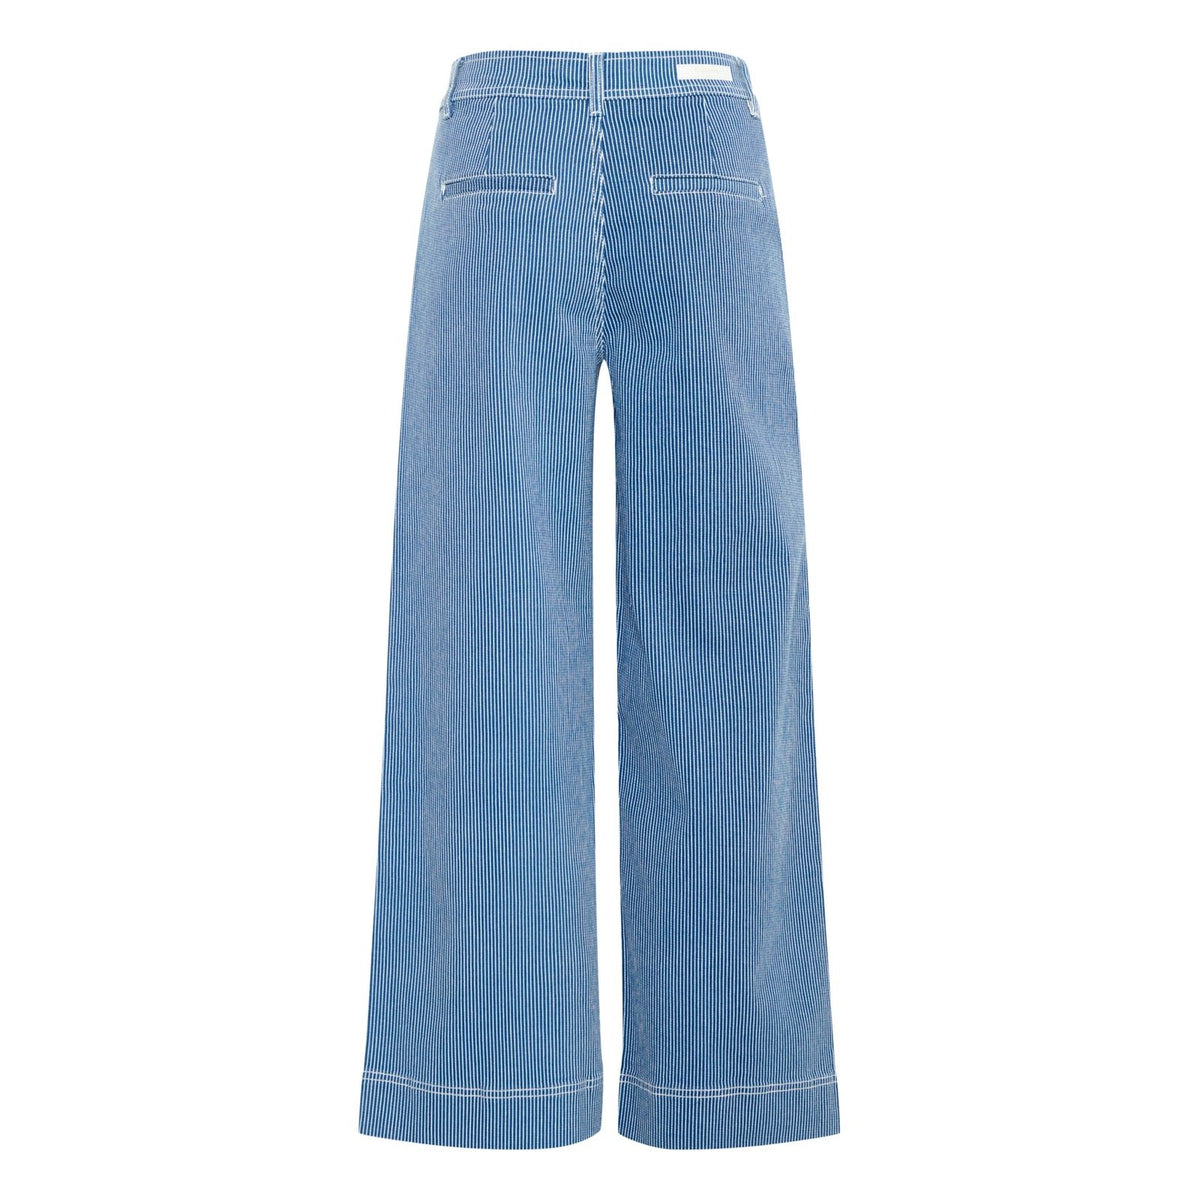 b.young Kato Railroad Stripe Jeans